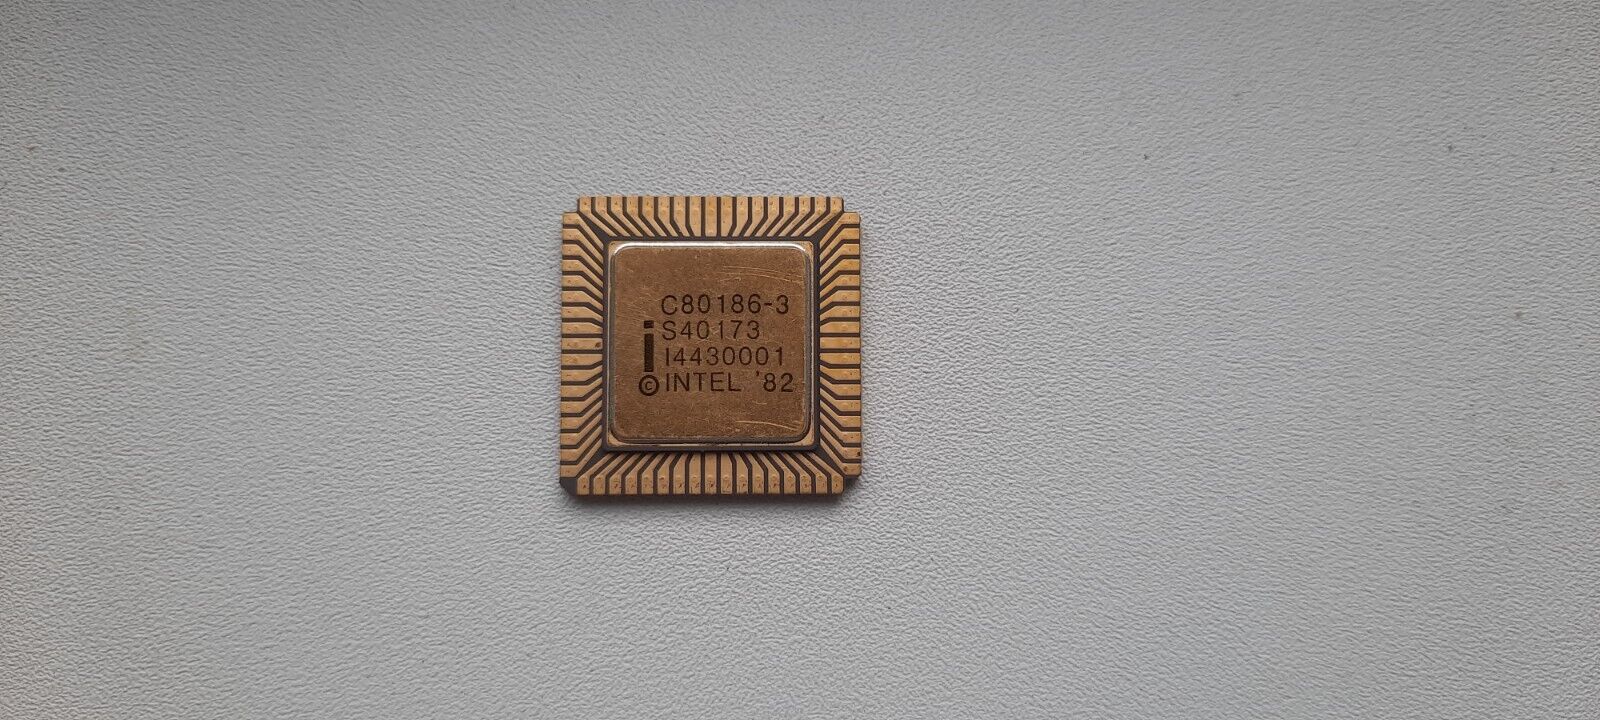 80186 Intel uncommon R80186-3 C80186-3 S40142 S40173 vintage CPU